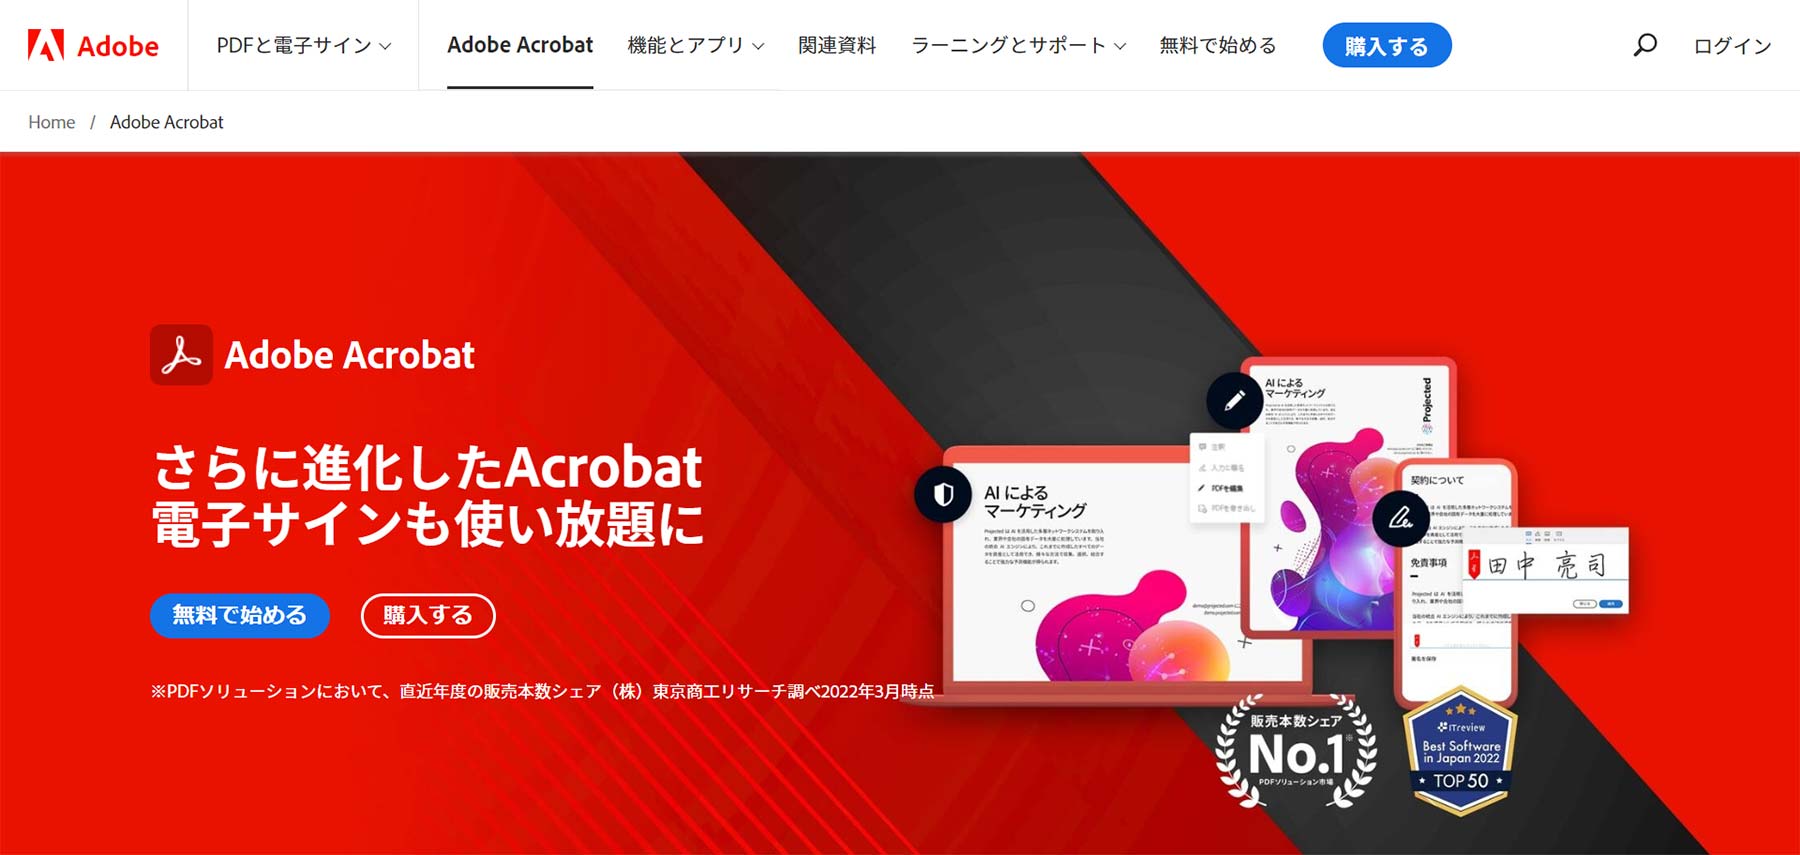 Adobe Acrobat公式Webサイト